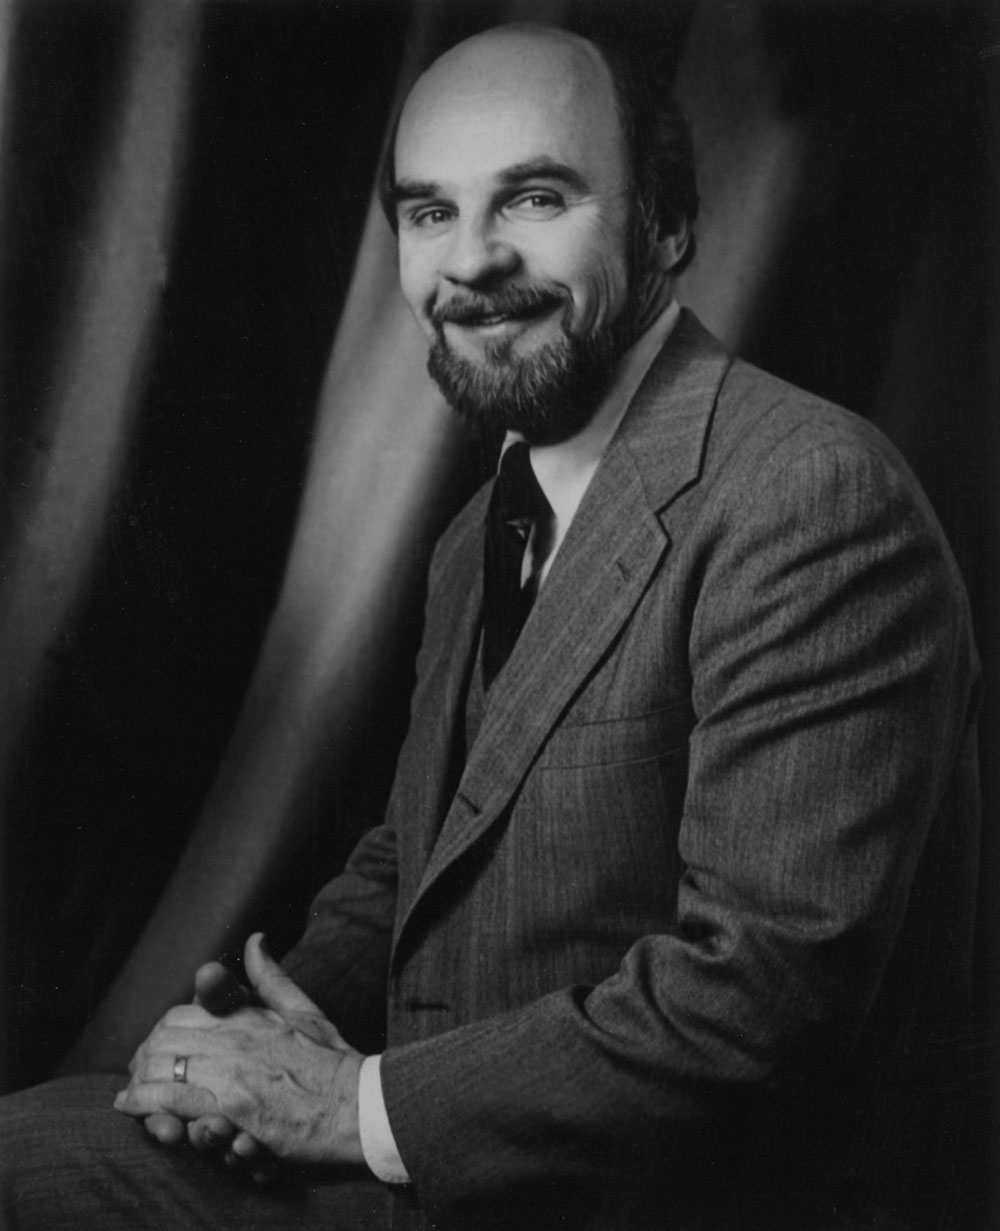 Patrick Jackson, PRSA President of 1980